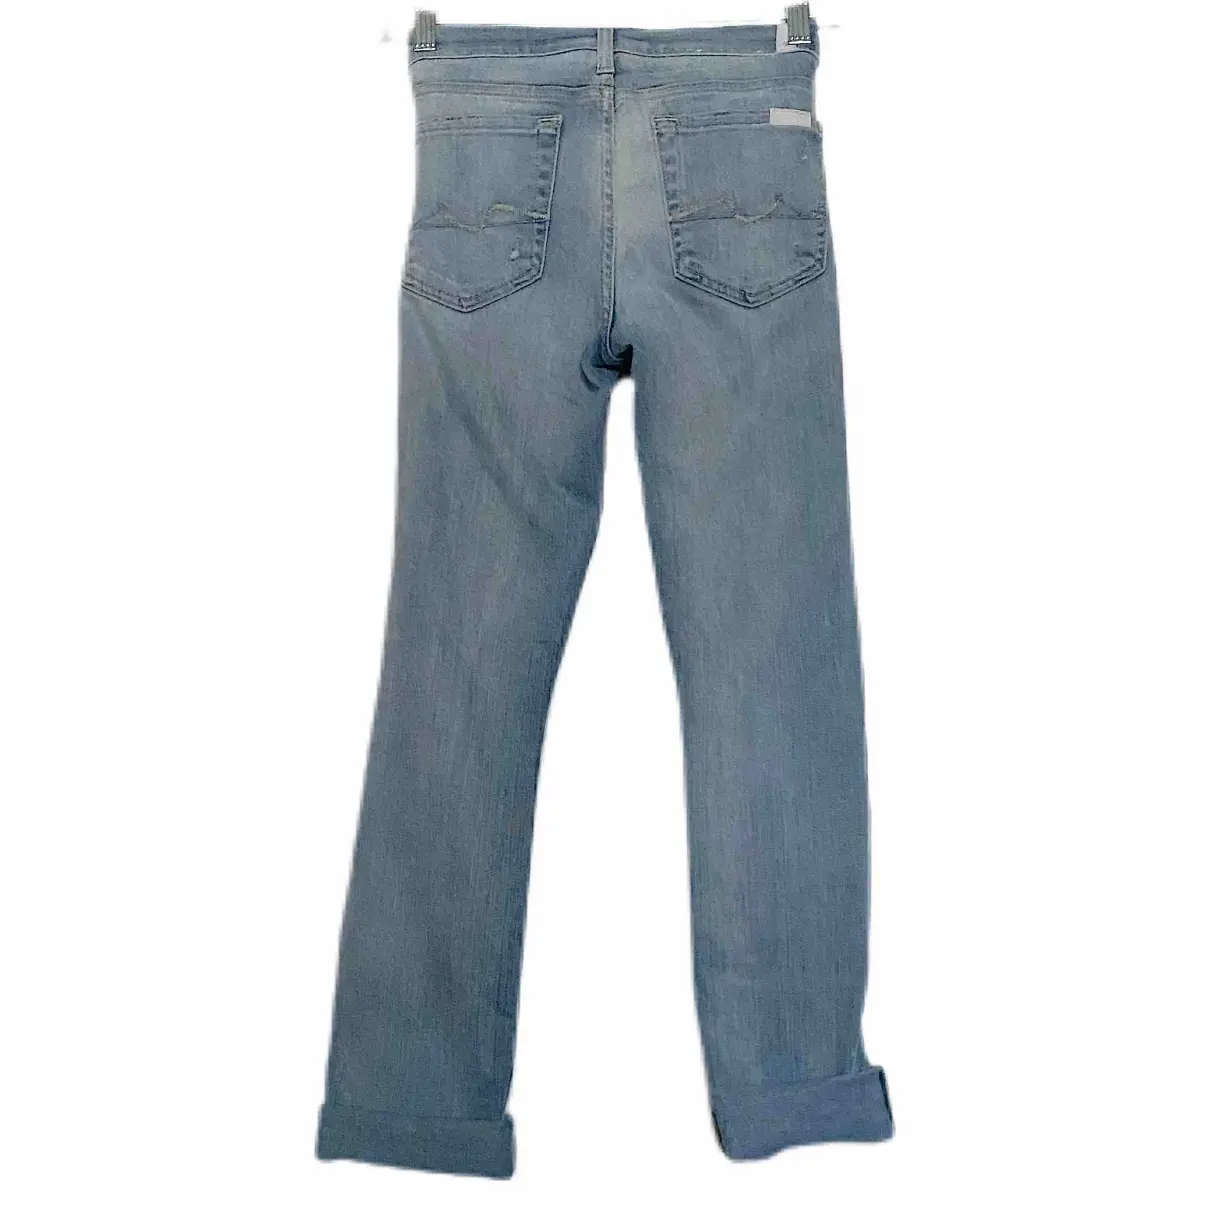 Buy 7 For All Mankind Boyfriend jeans online